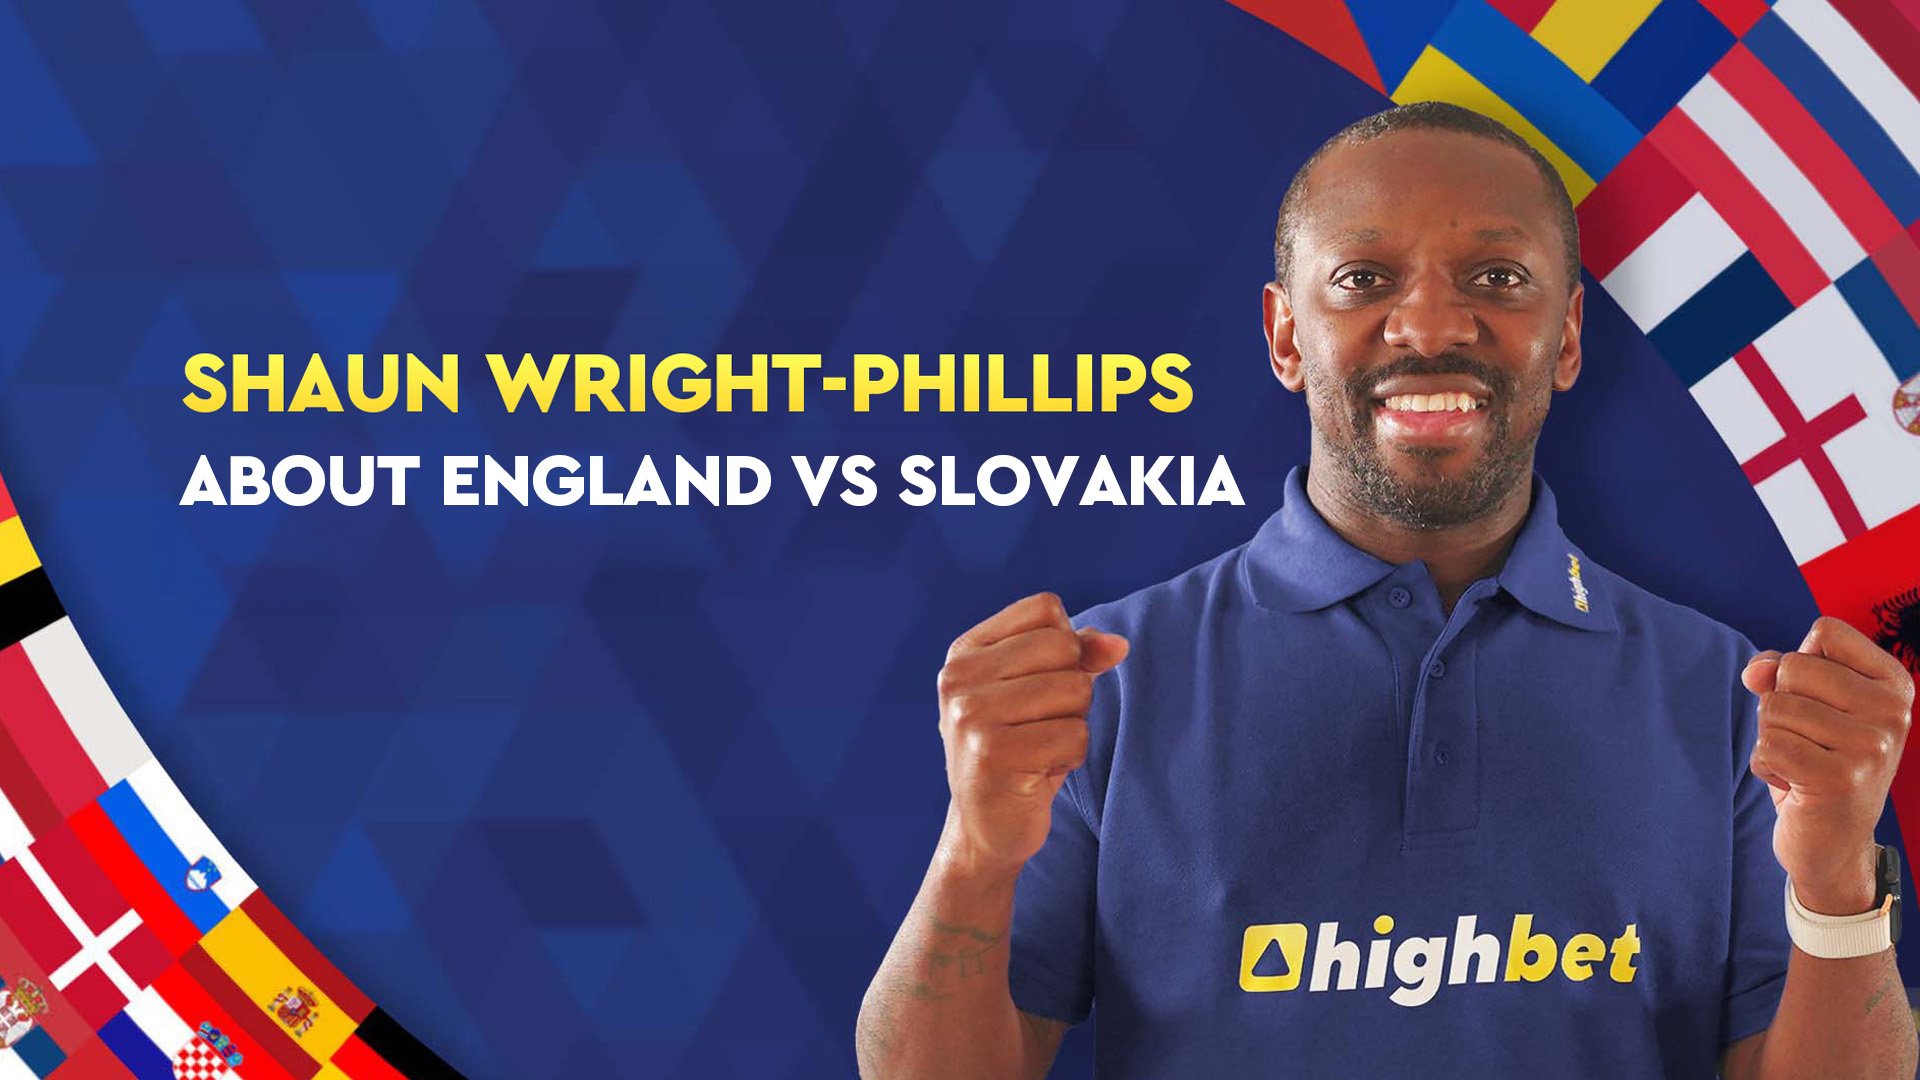 Video: Shaun Wright-Phillips about England vs Slovakia